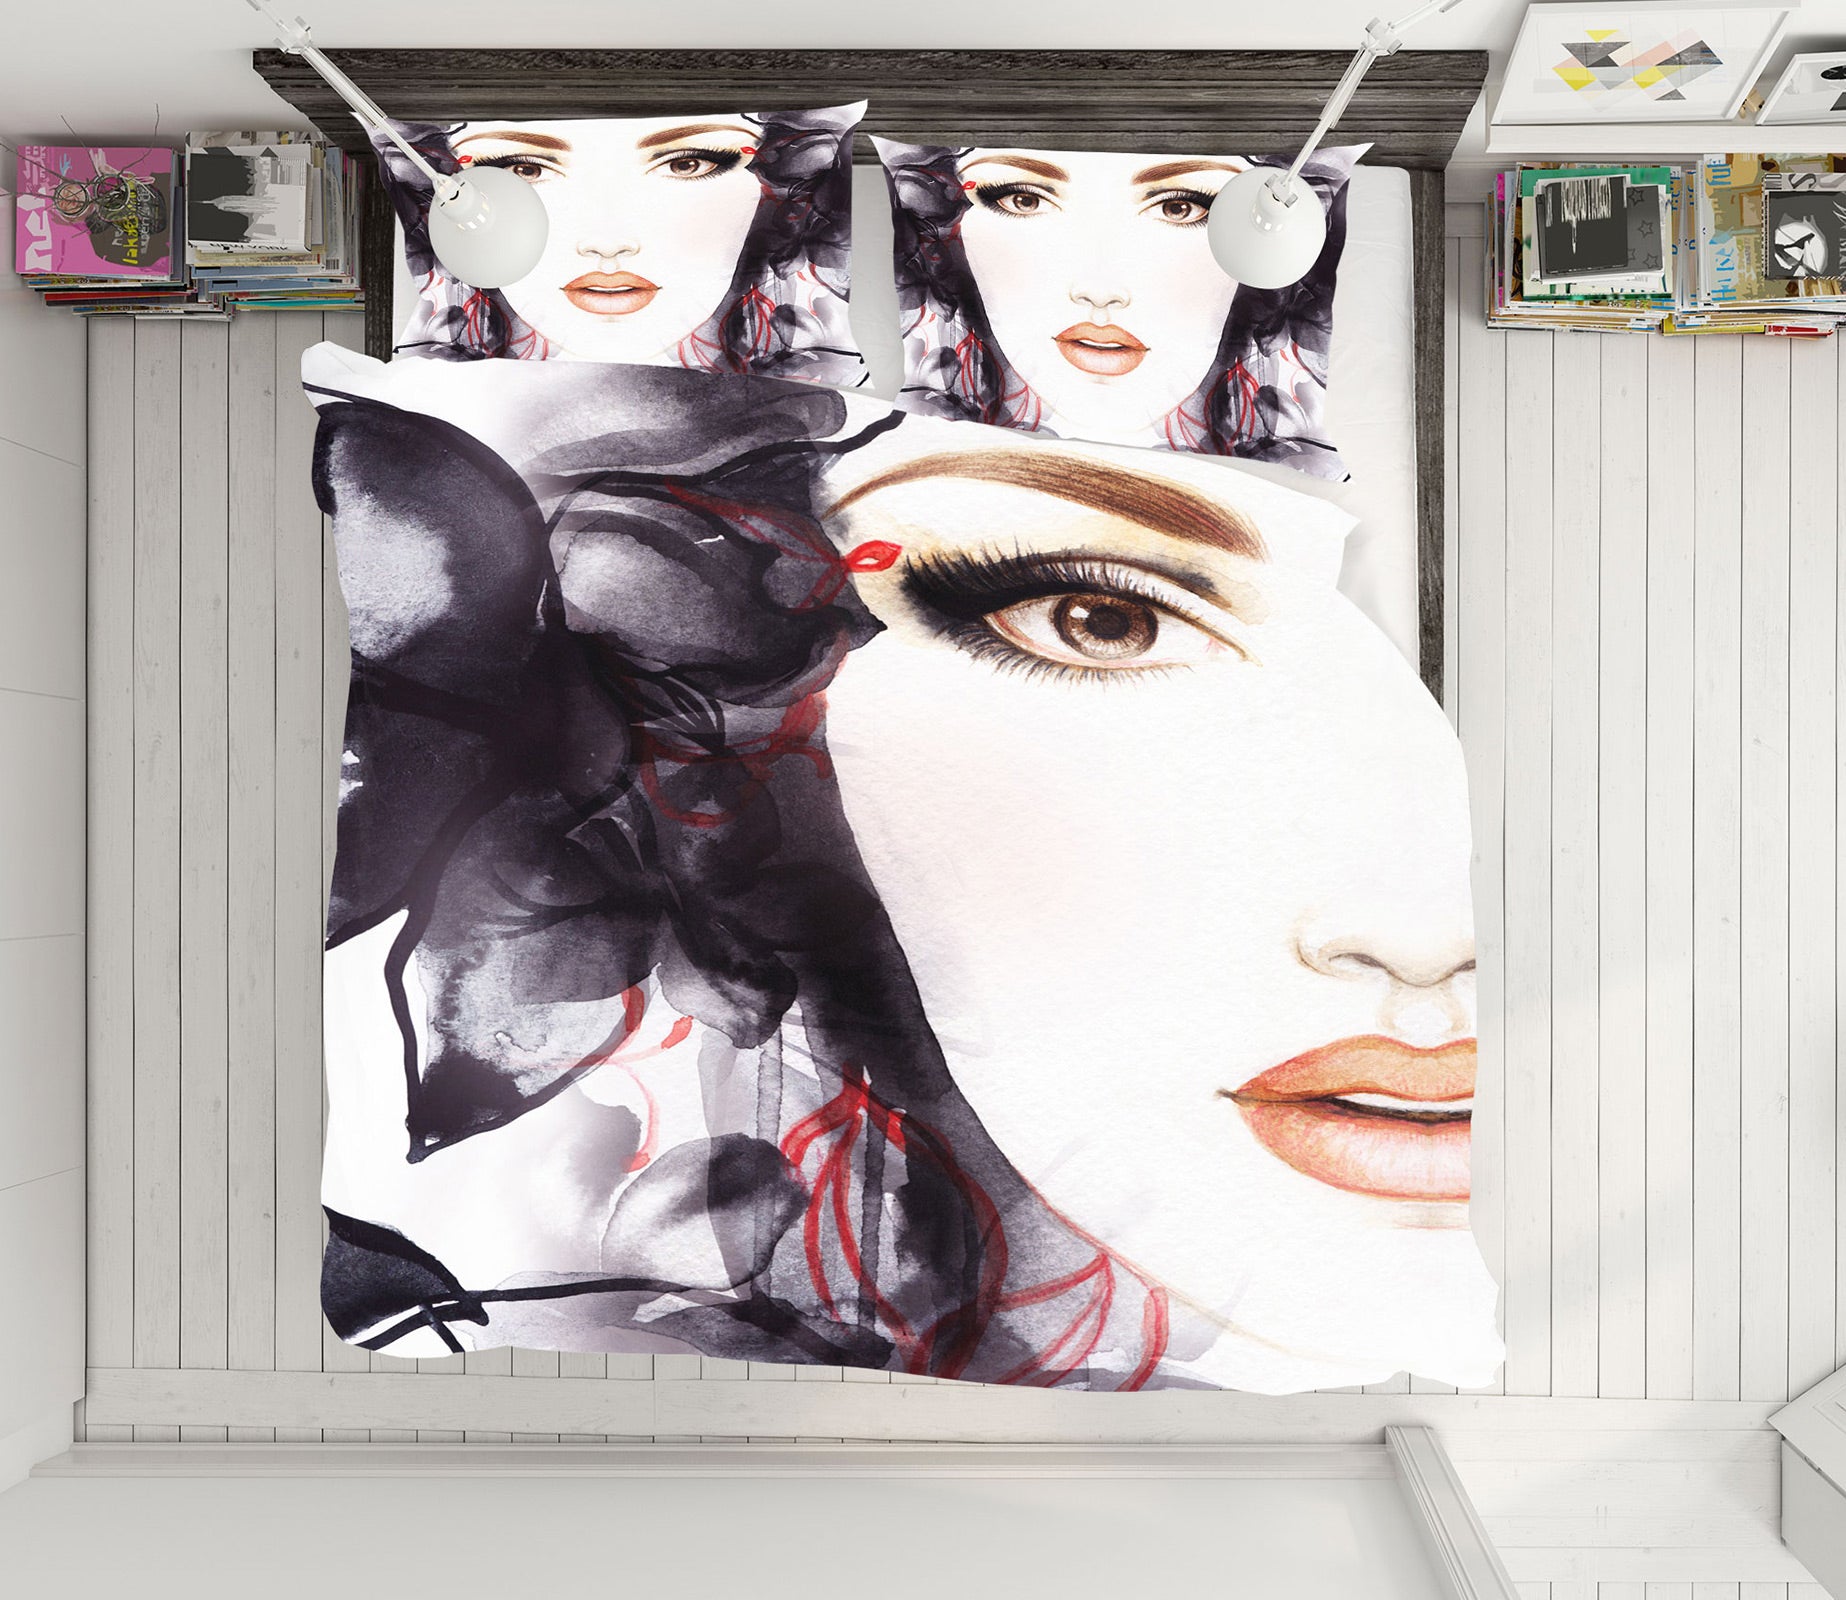 3D Model Woman 022 Bed Pillowcases Quilt